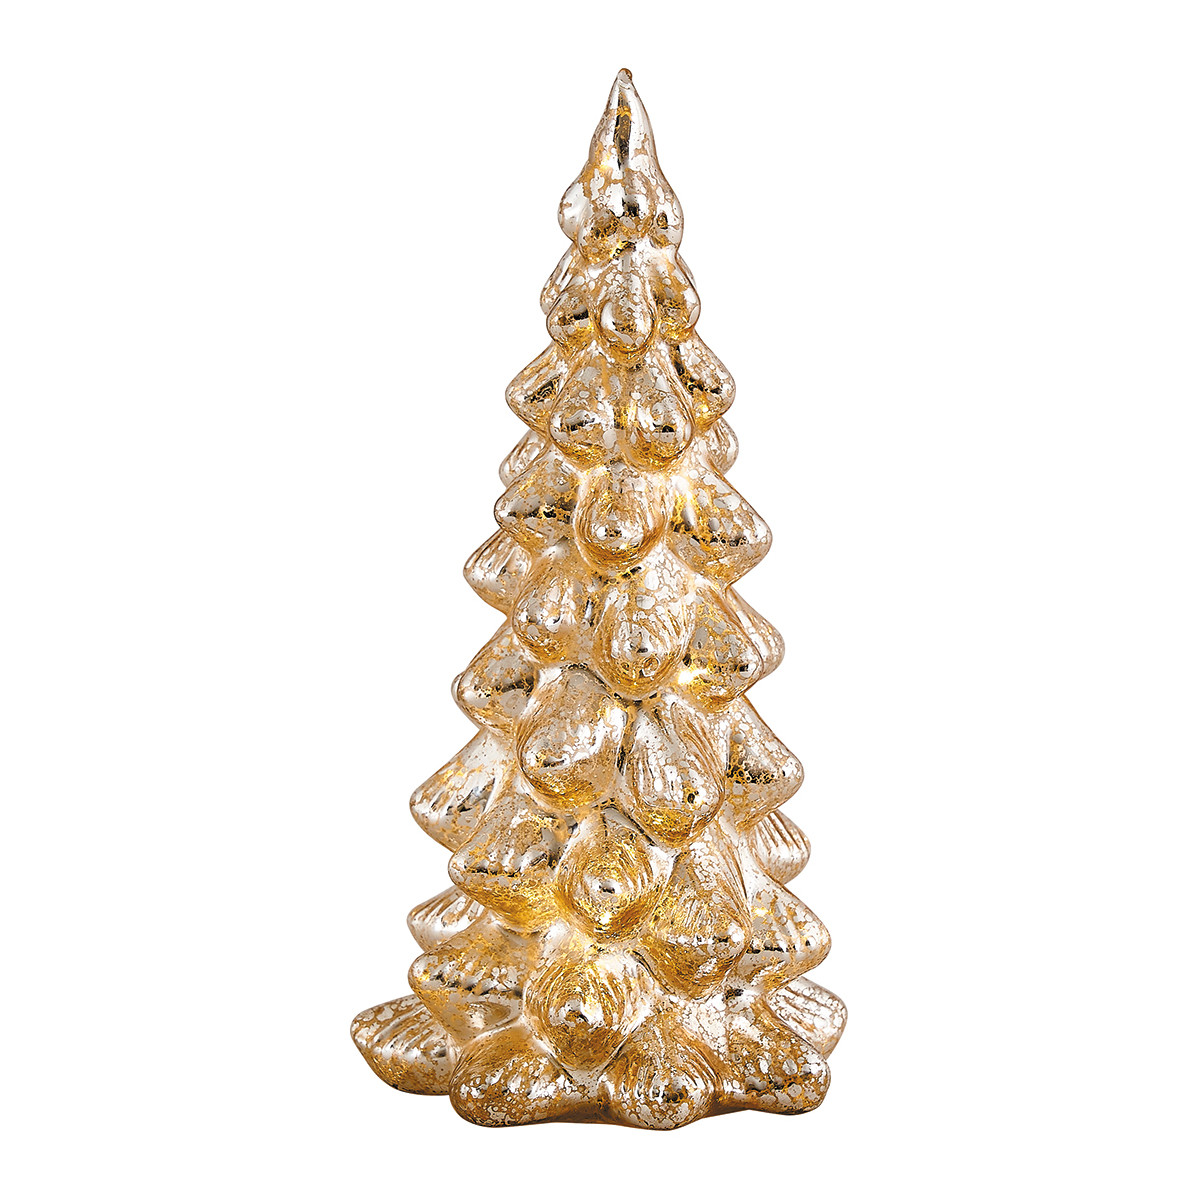 Abeto luminoso en cristal de mercurio dorado – Modelo pequeño Navidad Mathilde M